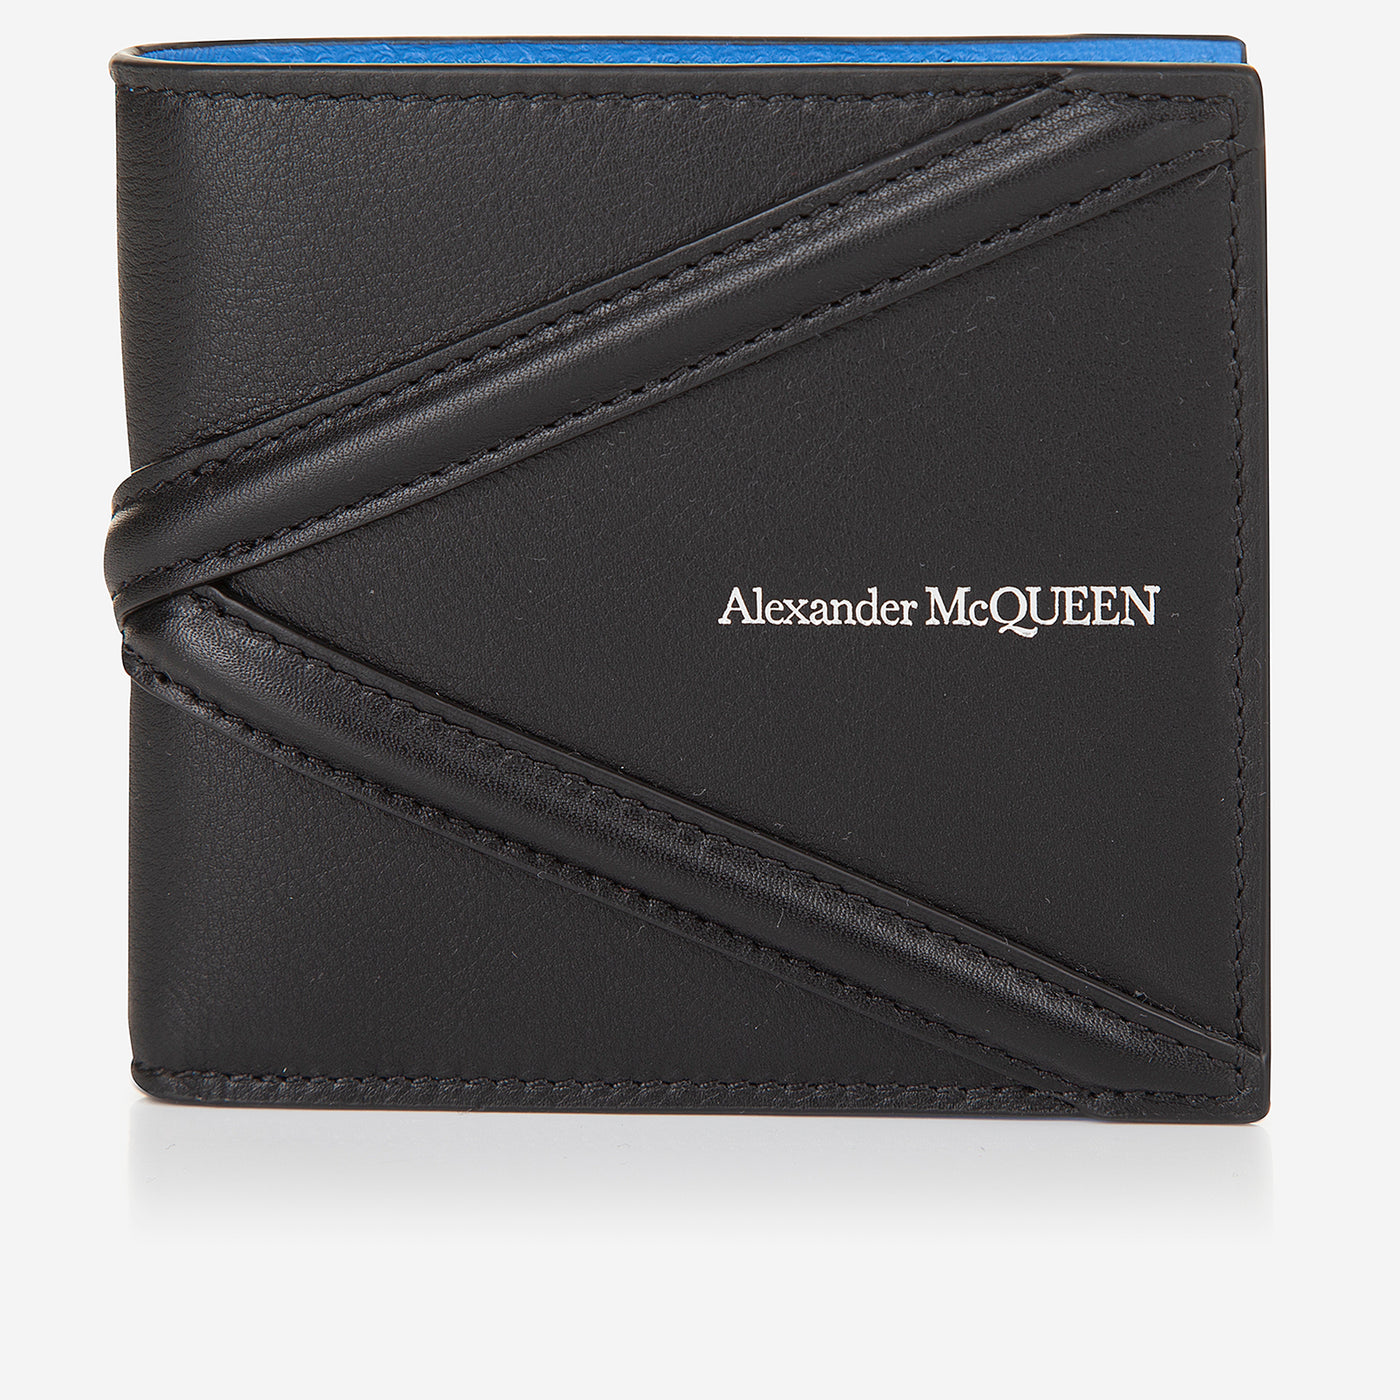 Alexander McQueen Harness Billfold Wallet